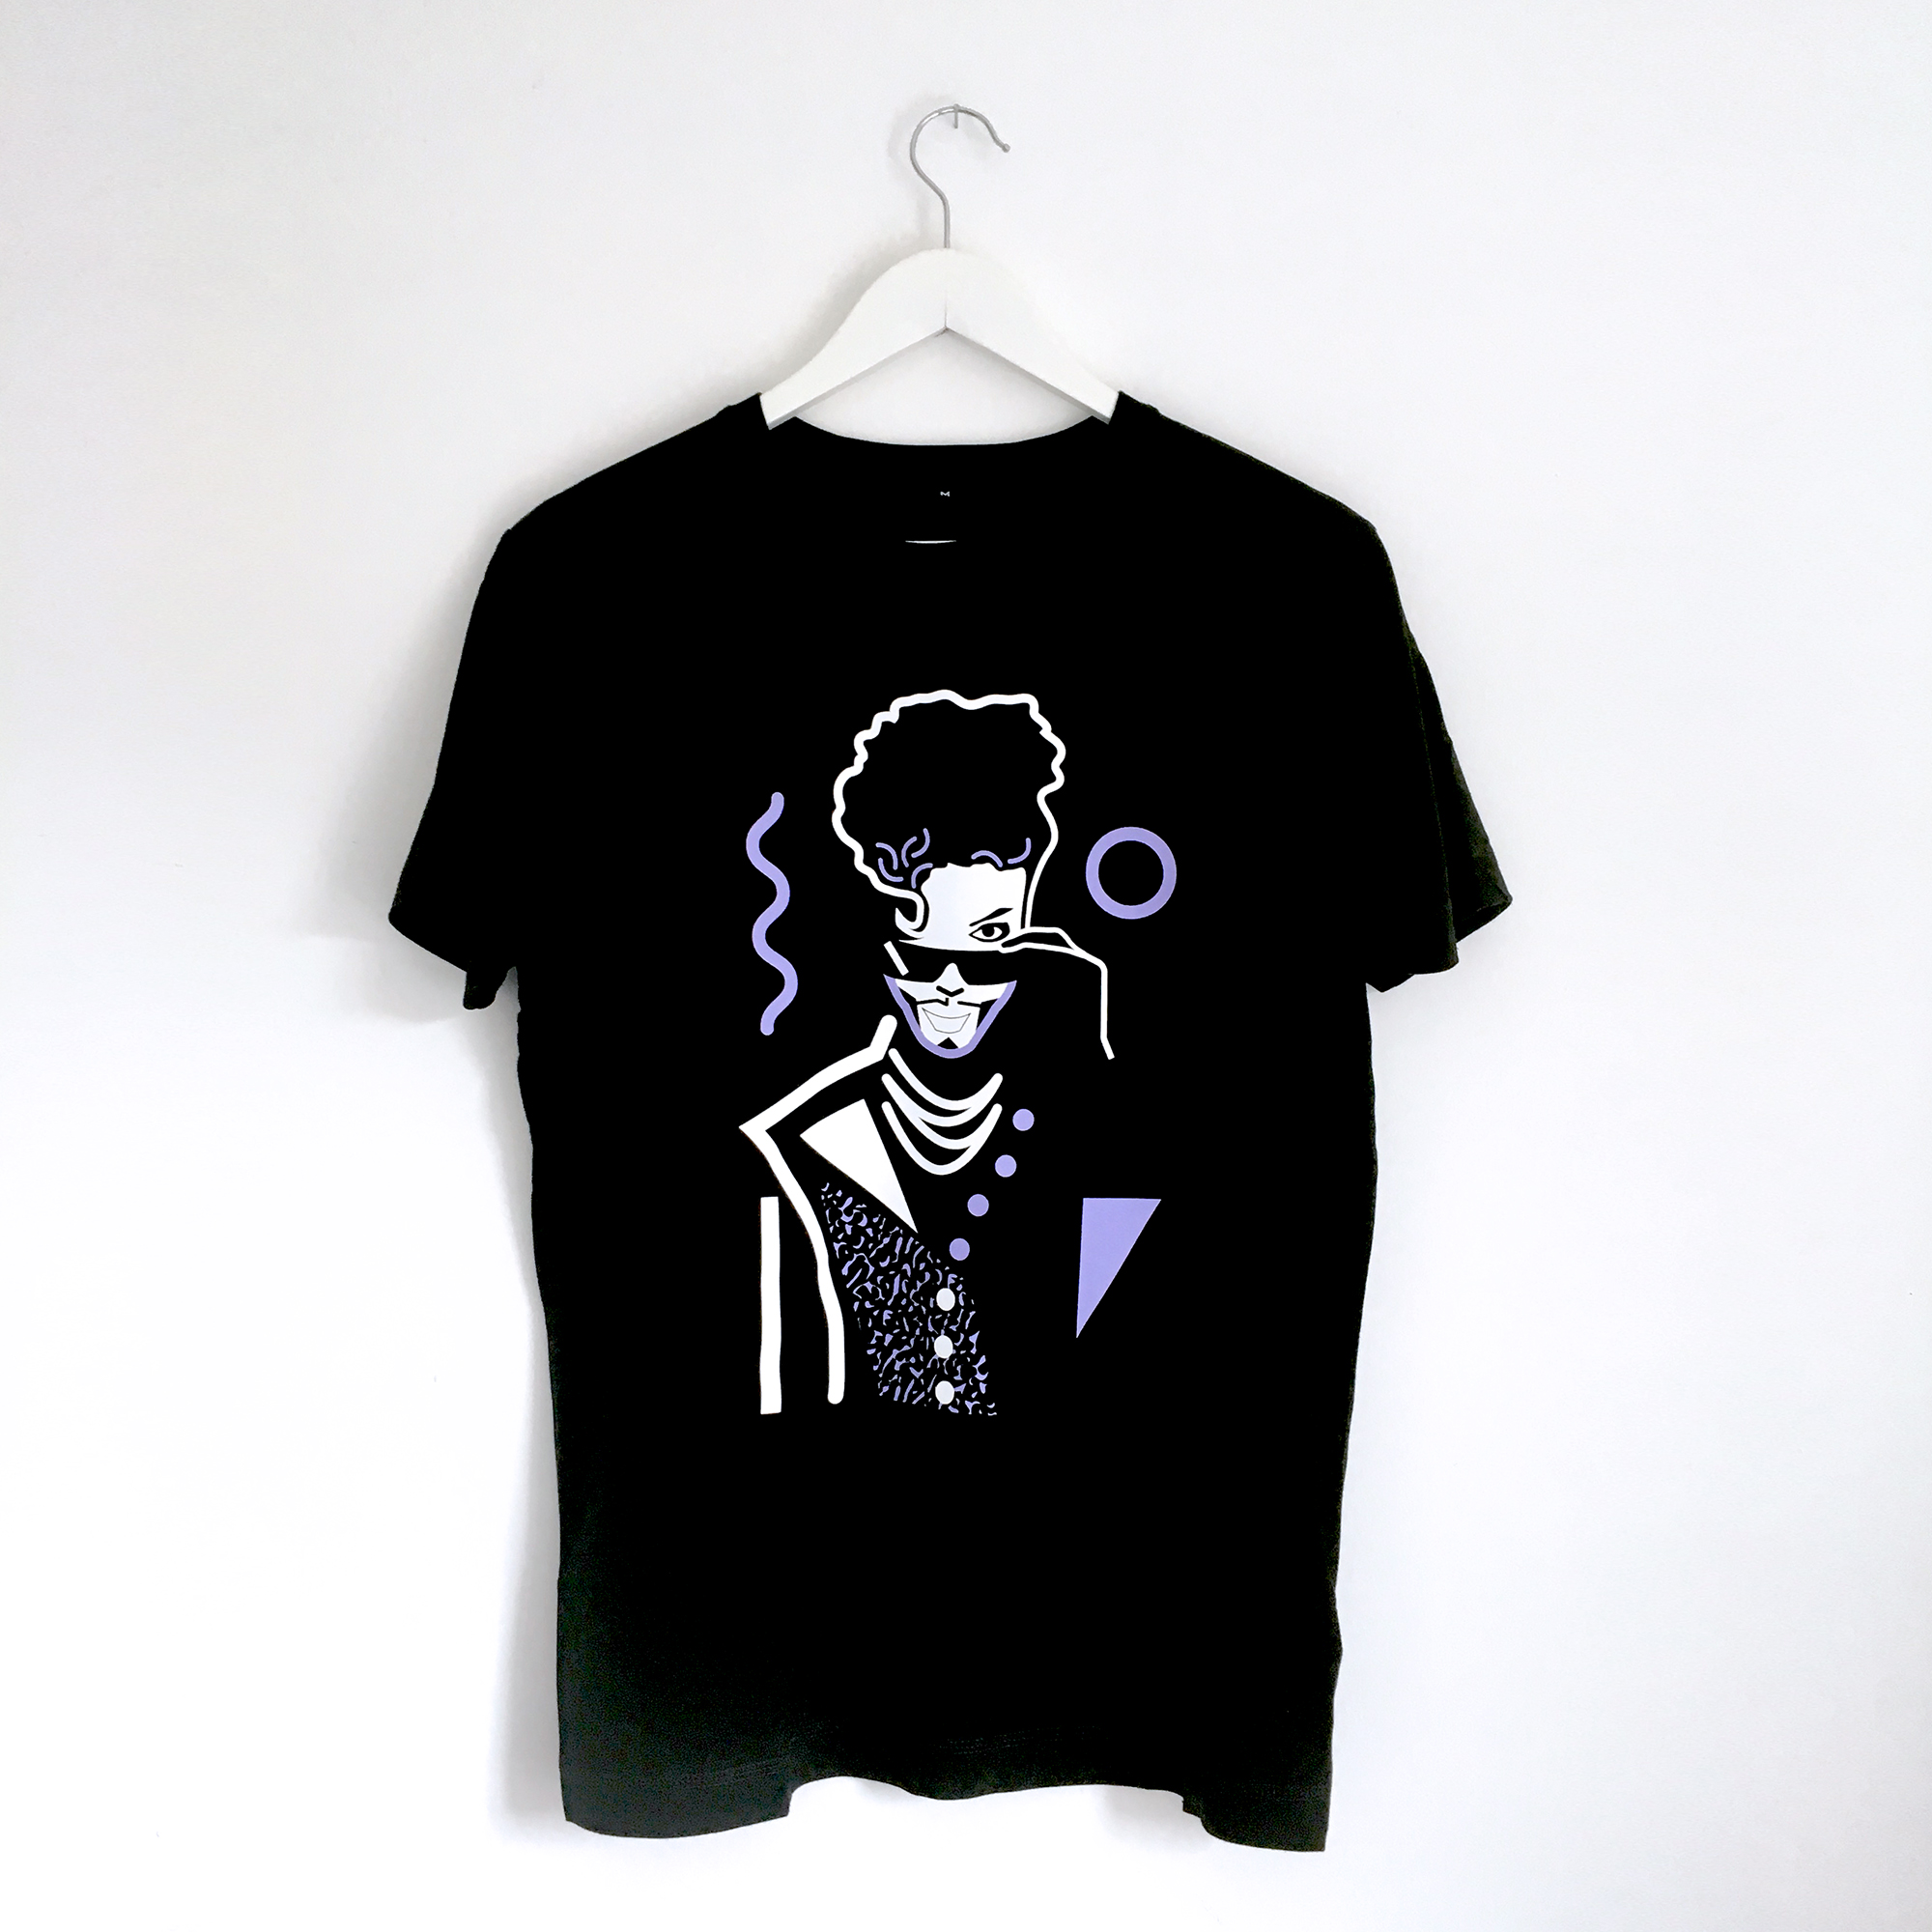 prince-tshirt-dropscotch-illustration-hanging-tee-product.jpg